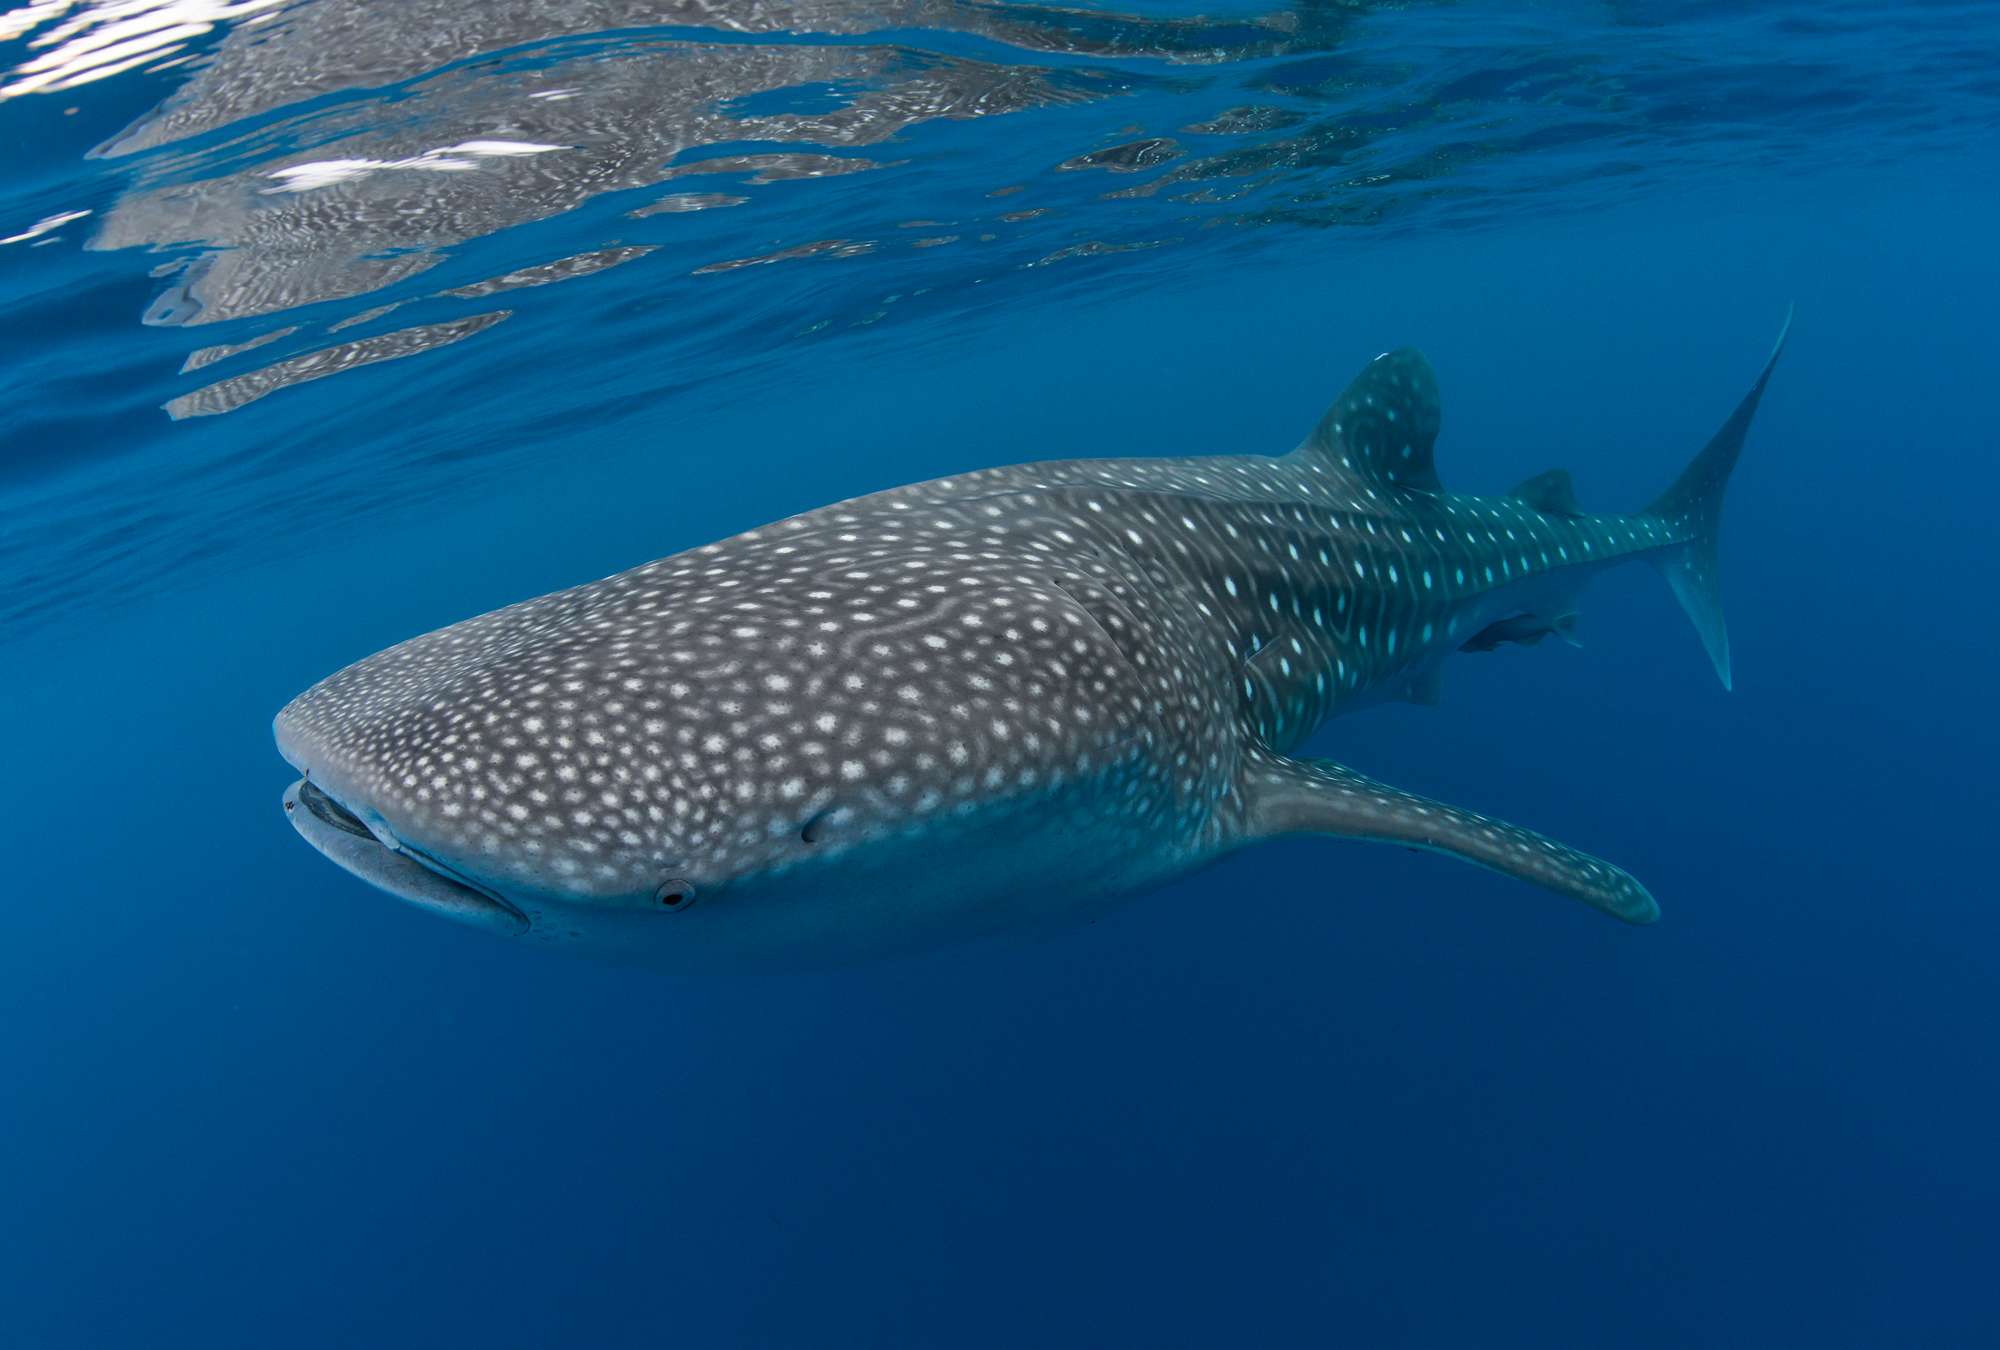             Fotomurali subacqueo con motivo squalo balena
        